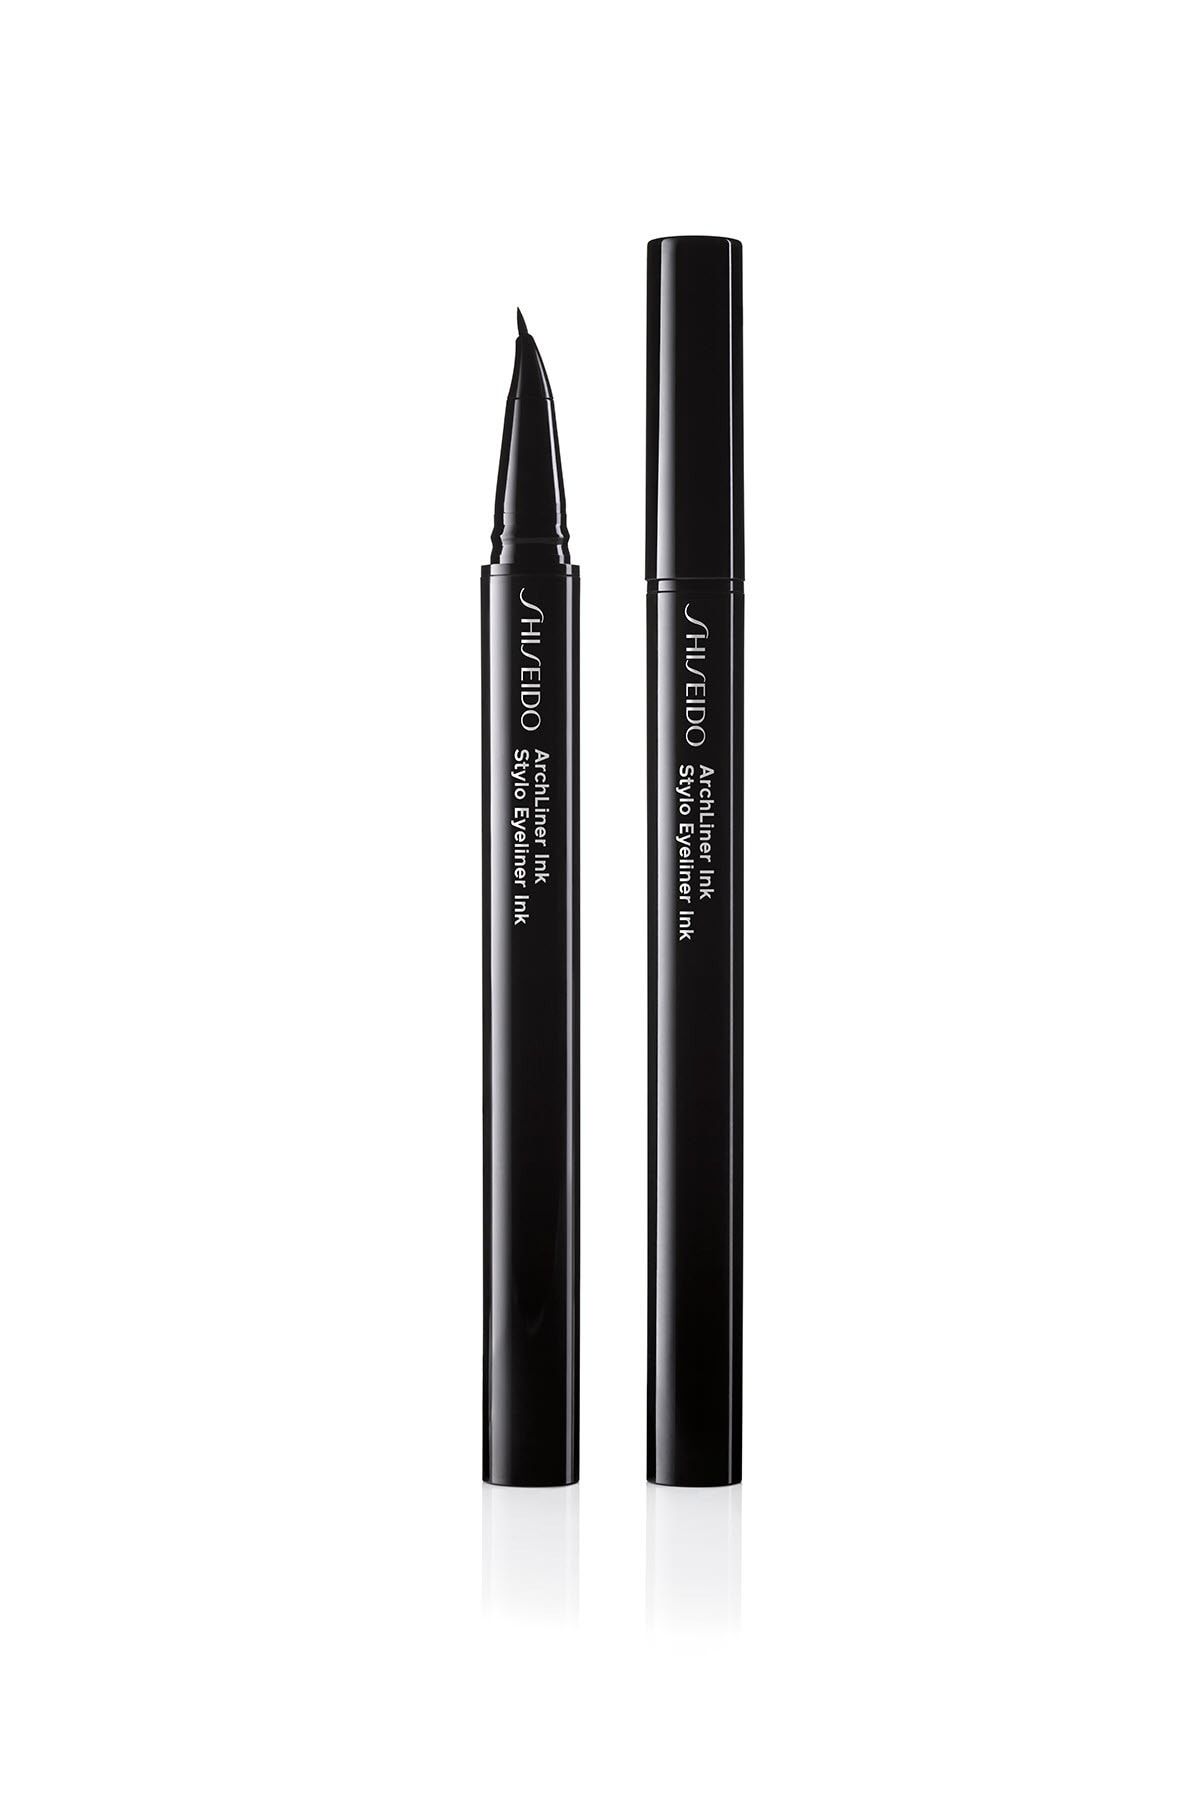 Shiseido İnce ve Kıvrık Uçlu Likit Eyeliner - Archliner Ink 01 729238147324